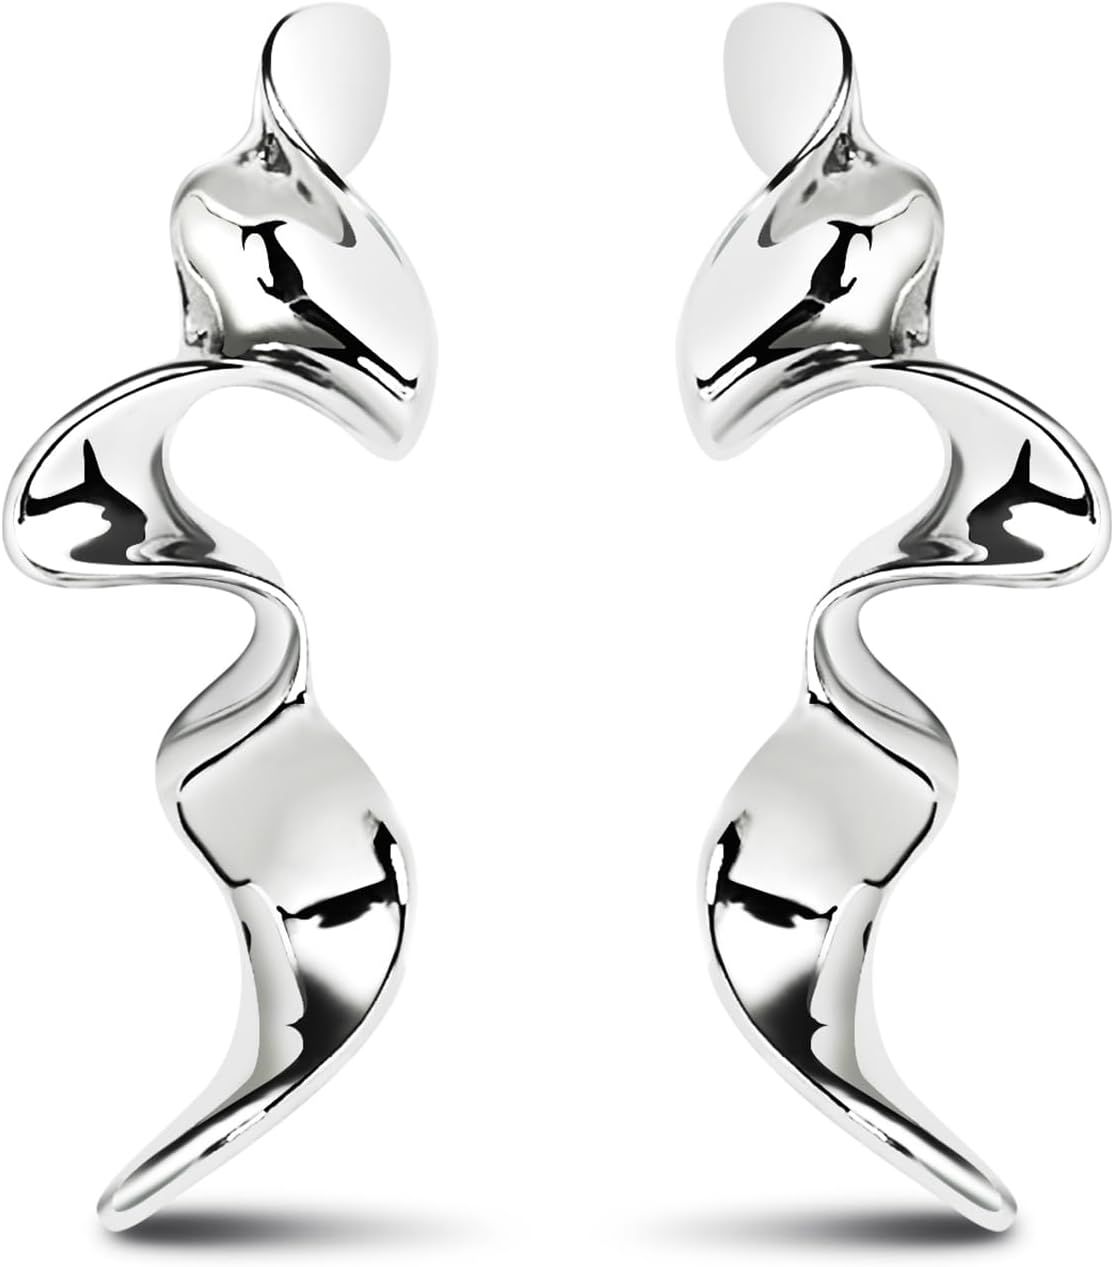 Stunning Spiral Geometric Sterling Silver Dangle Earrings for Women - Elegant Statement Jewelry | Amazon (US)